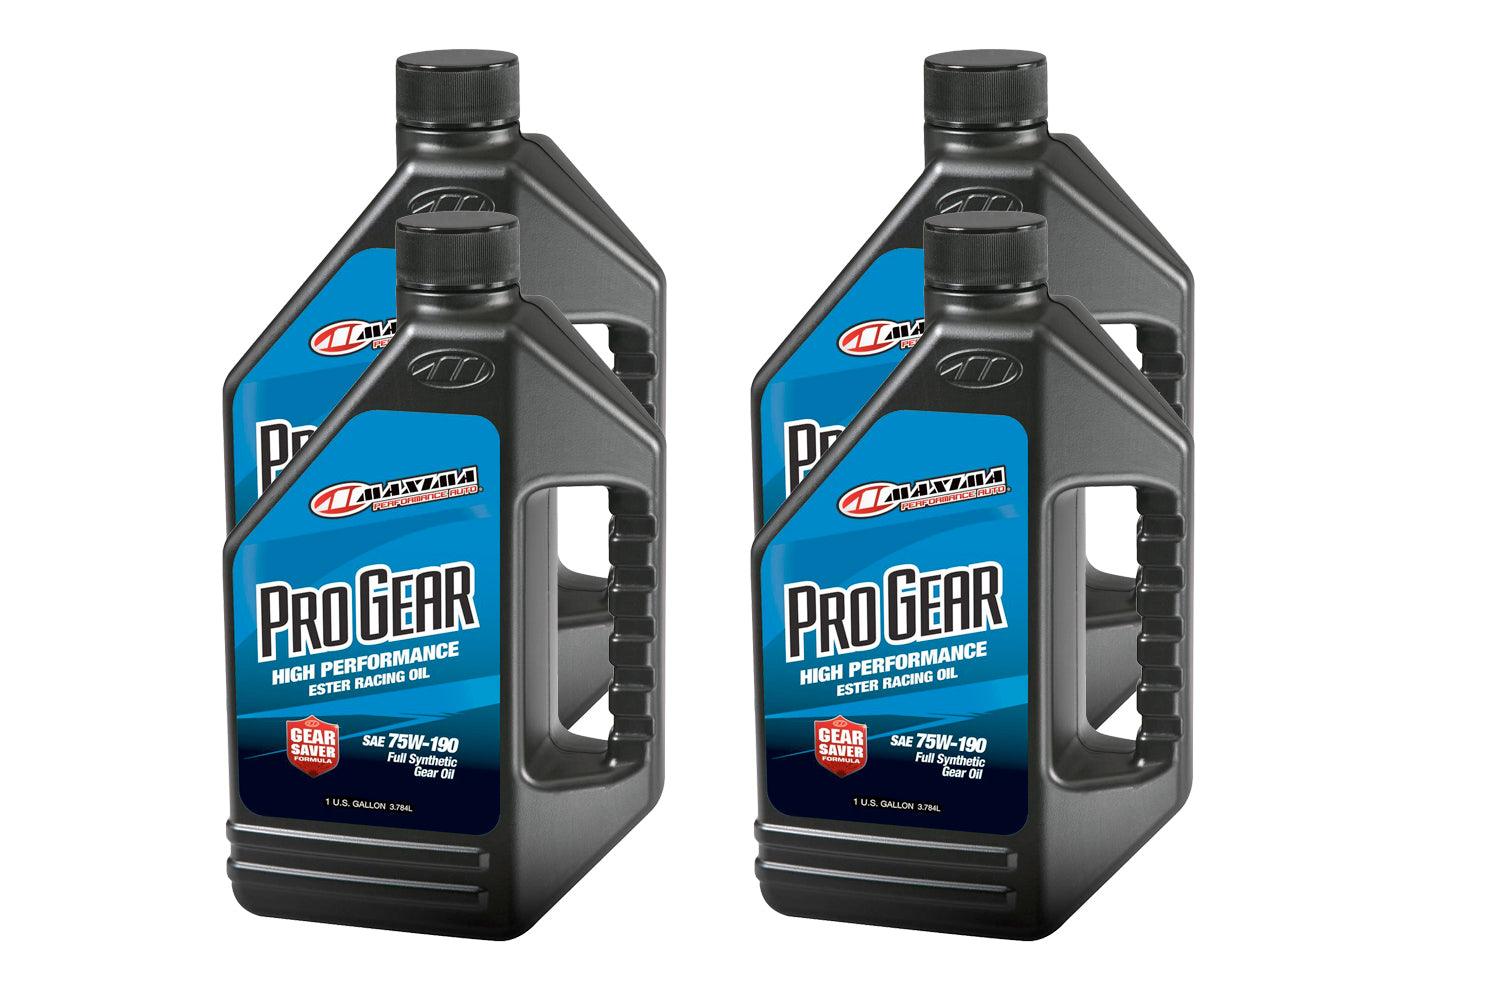 Pro Gear 75w190 Gear Oil Case 4 x 1 Gallon - Burlile Performance Products